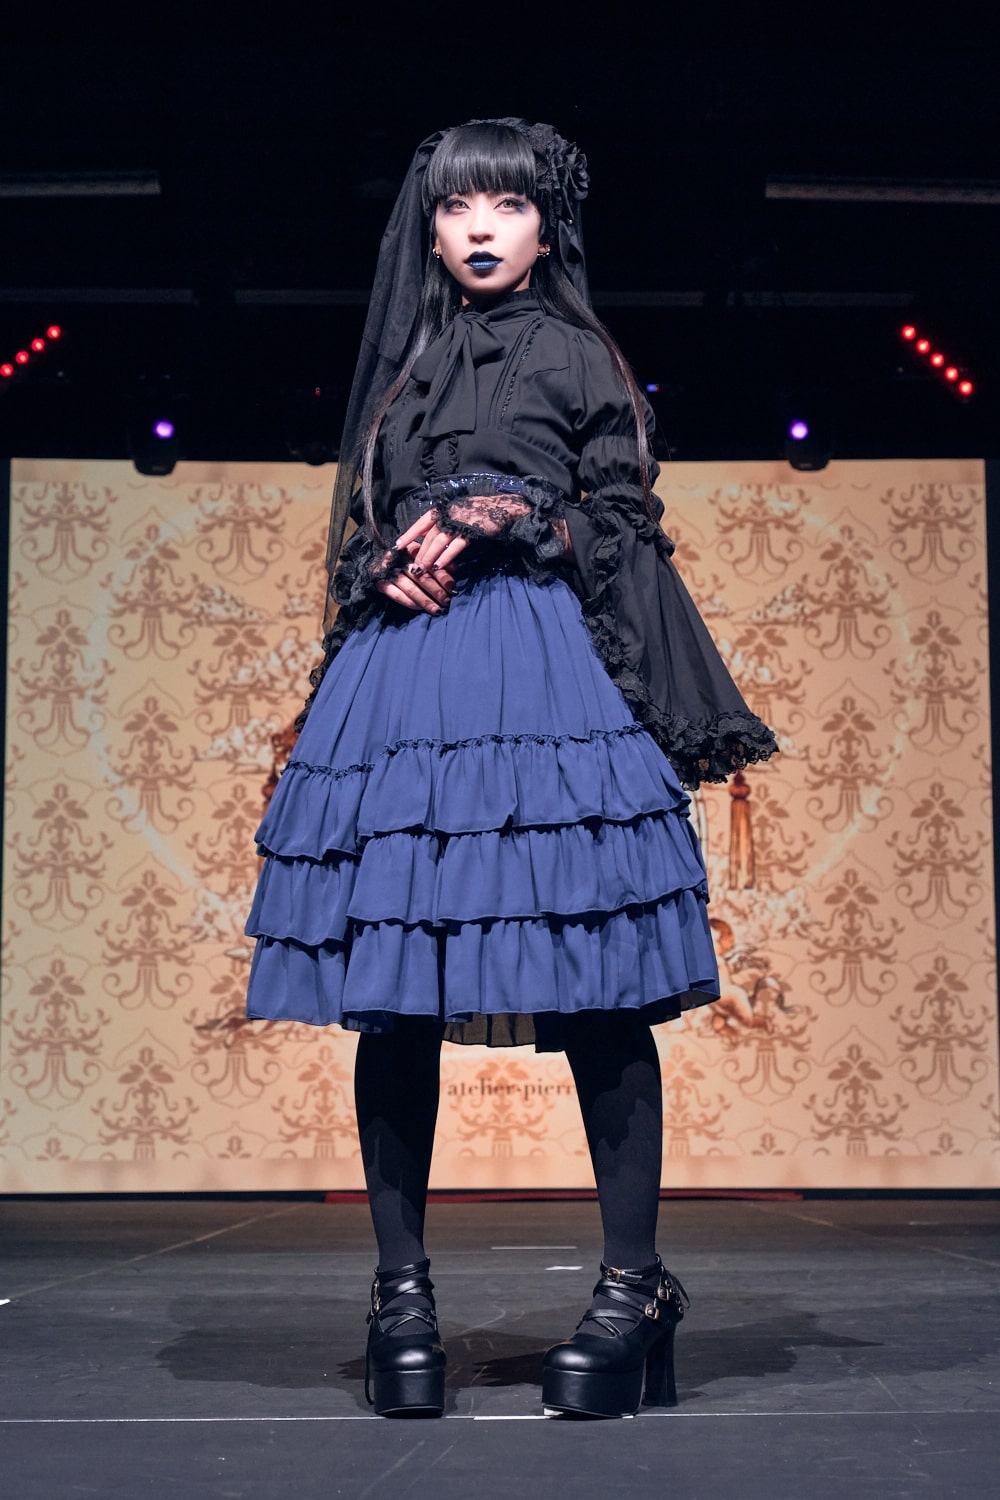 Atelier Pierrot gothic lolita model wearing black blouse, blue corset and skirt - full body standing pose 2.